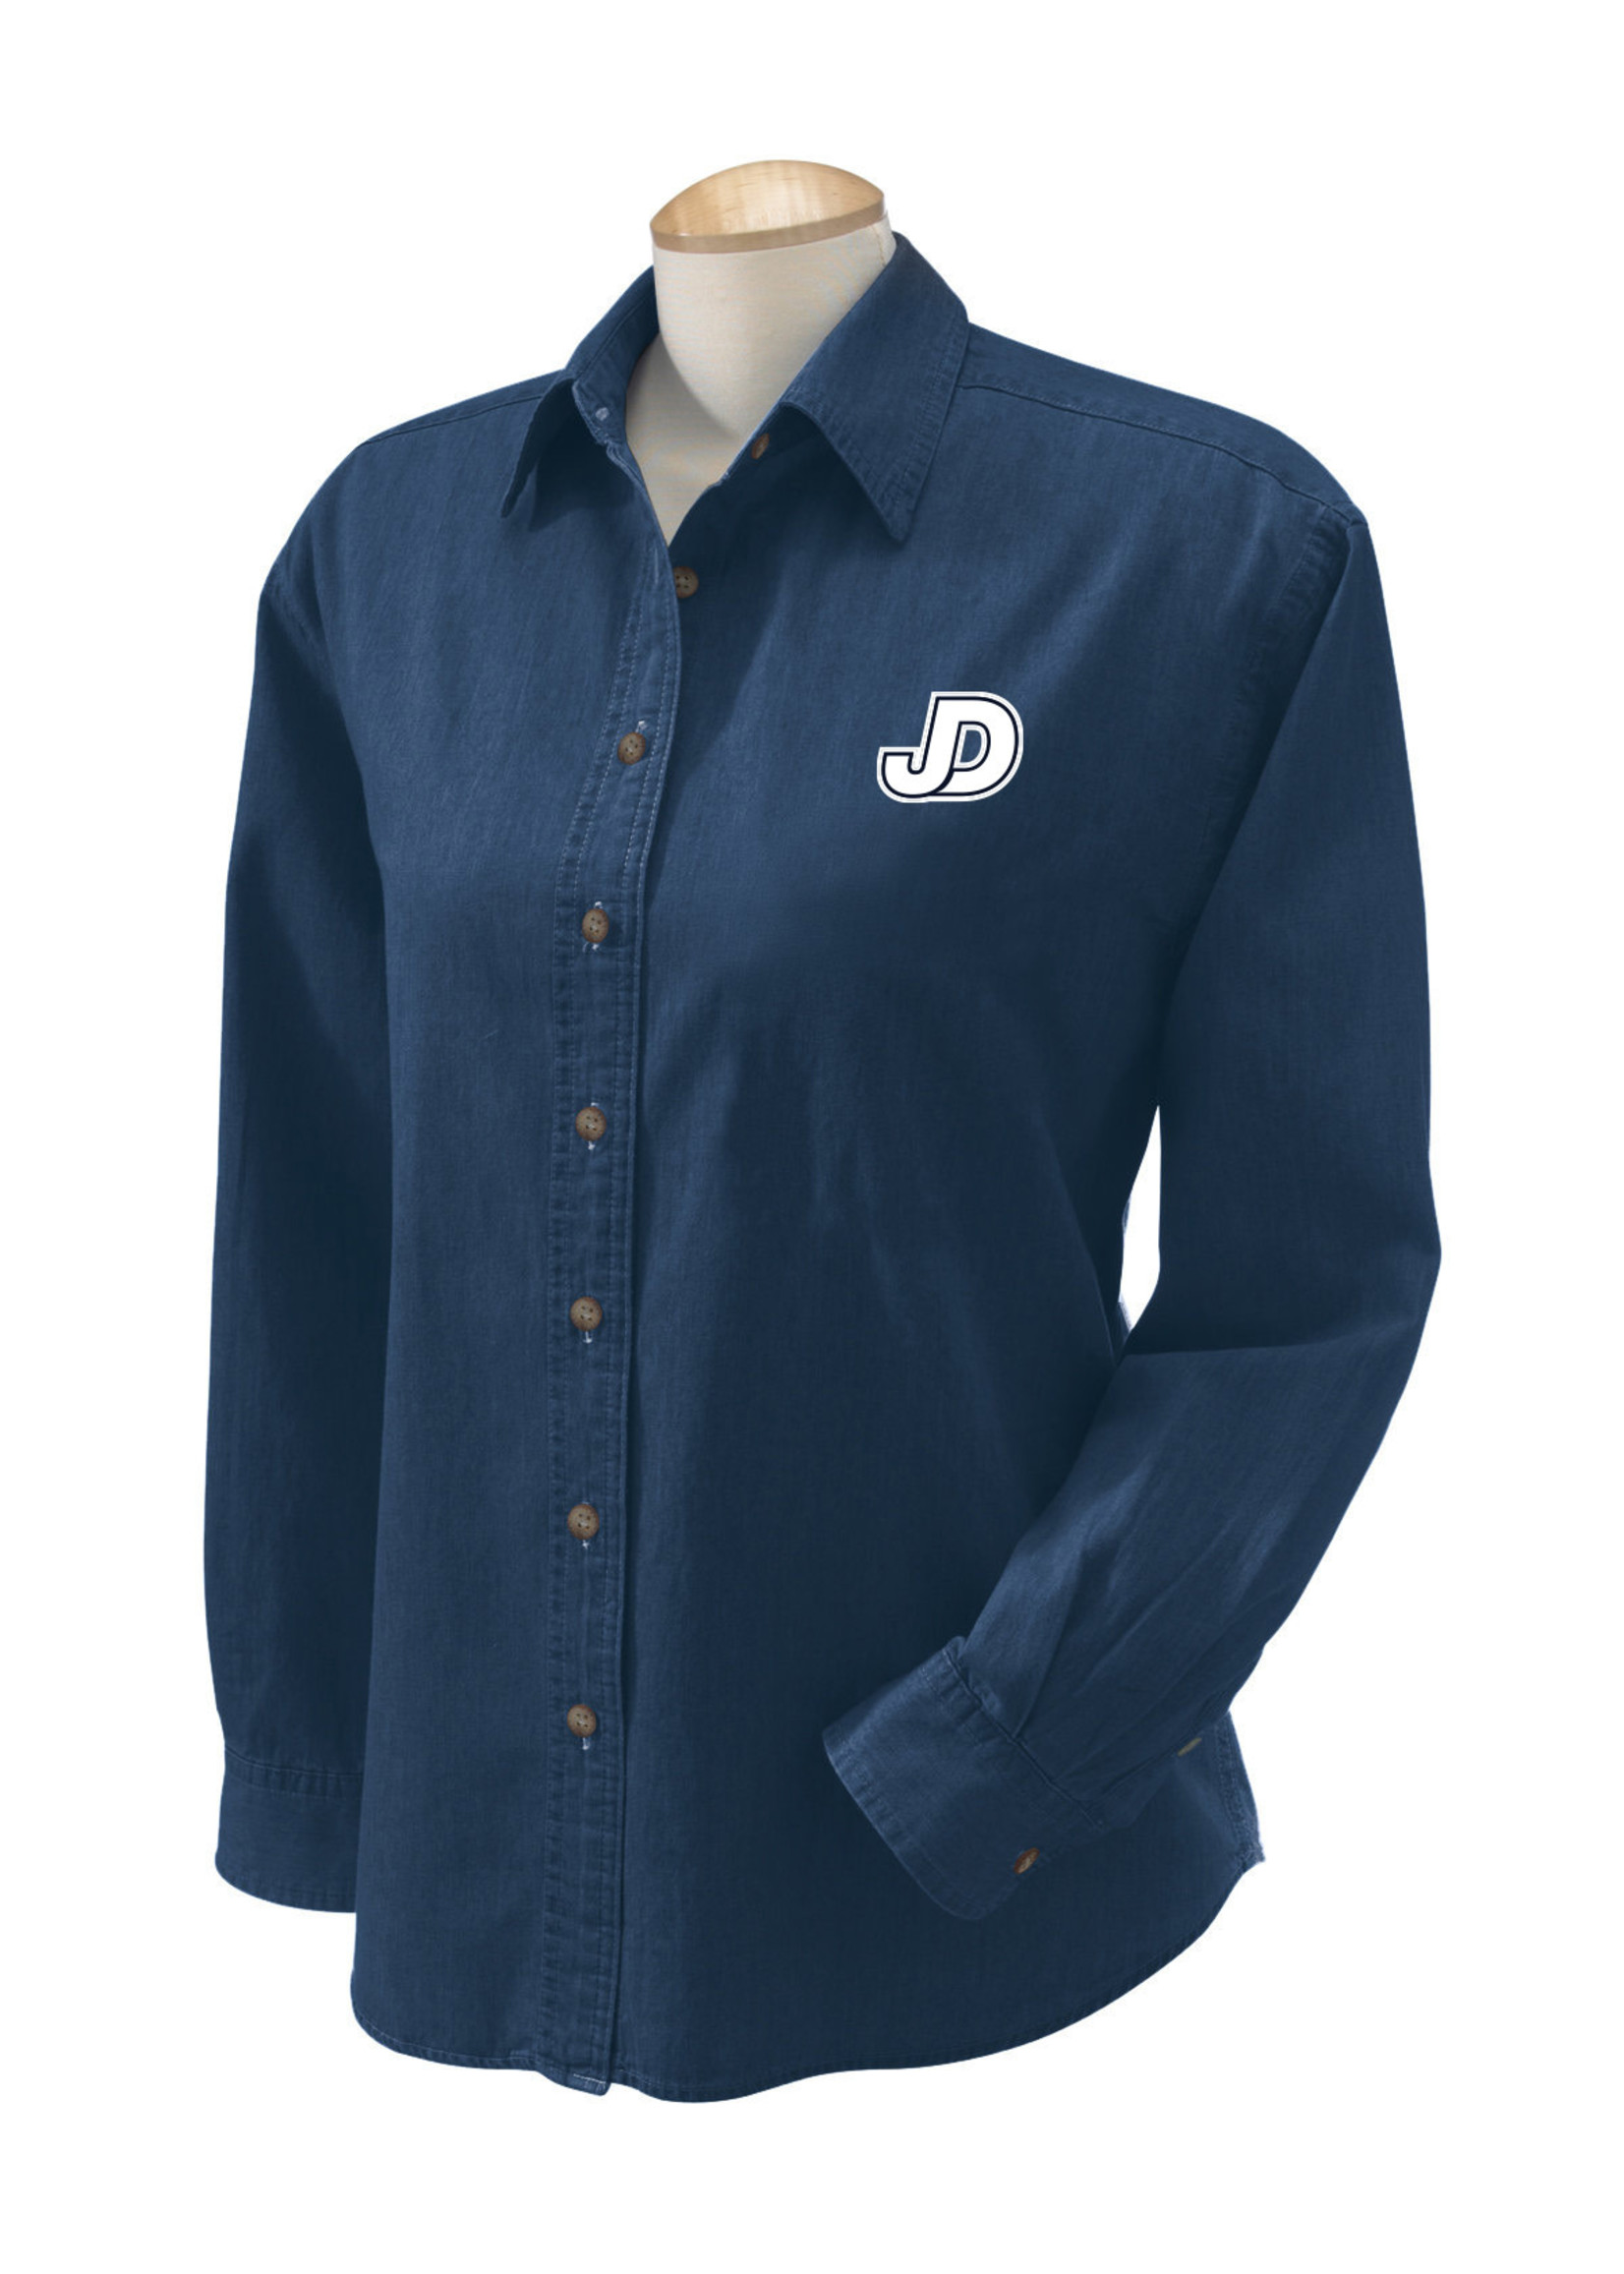 NON-UNIFORM Shirt - JD Denim Ladies long sleeve